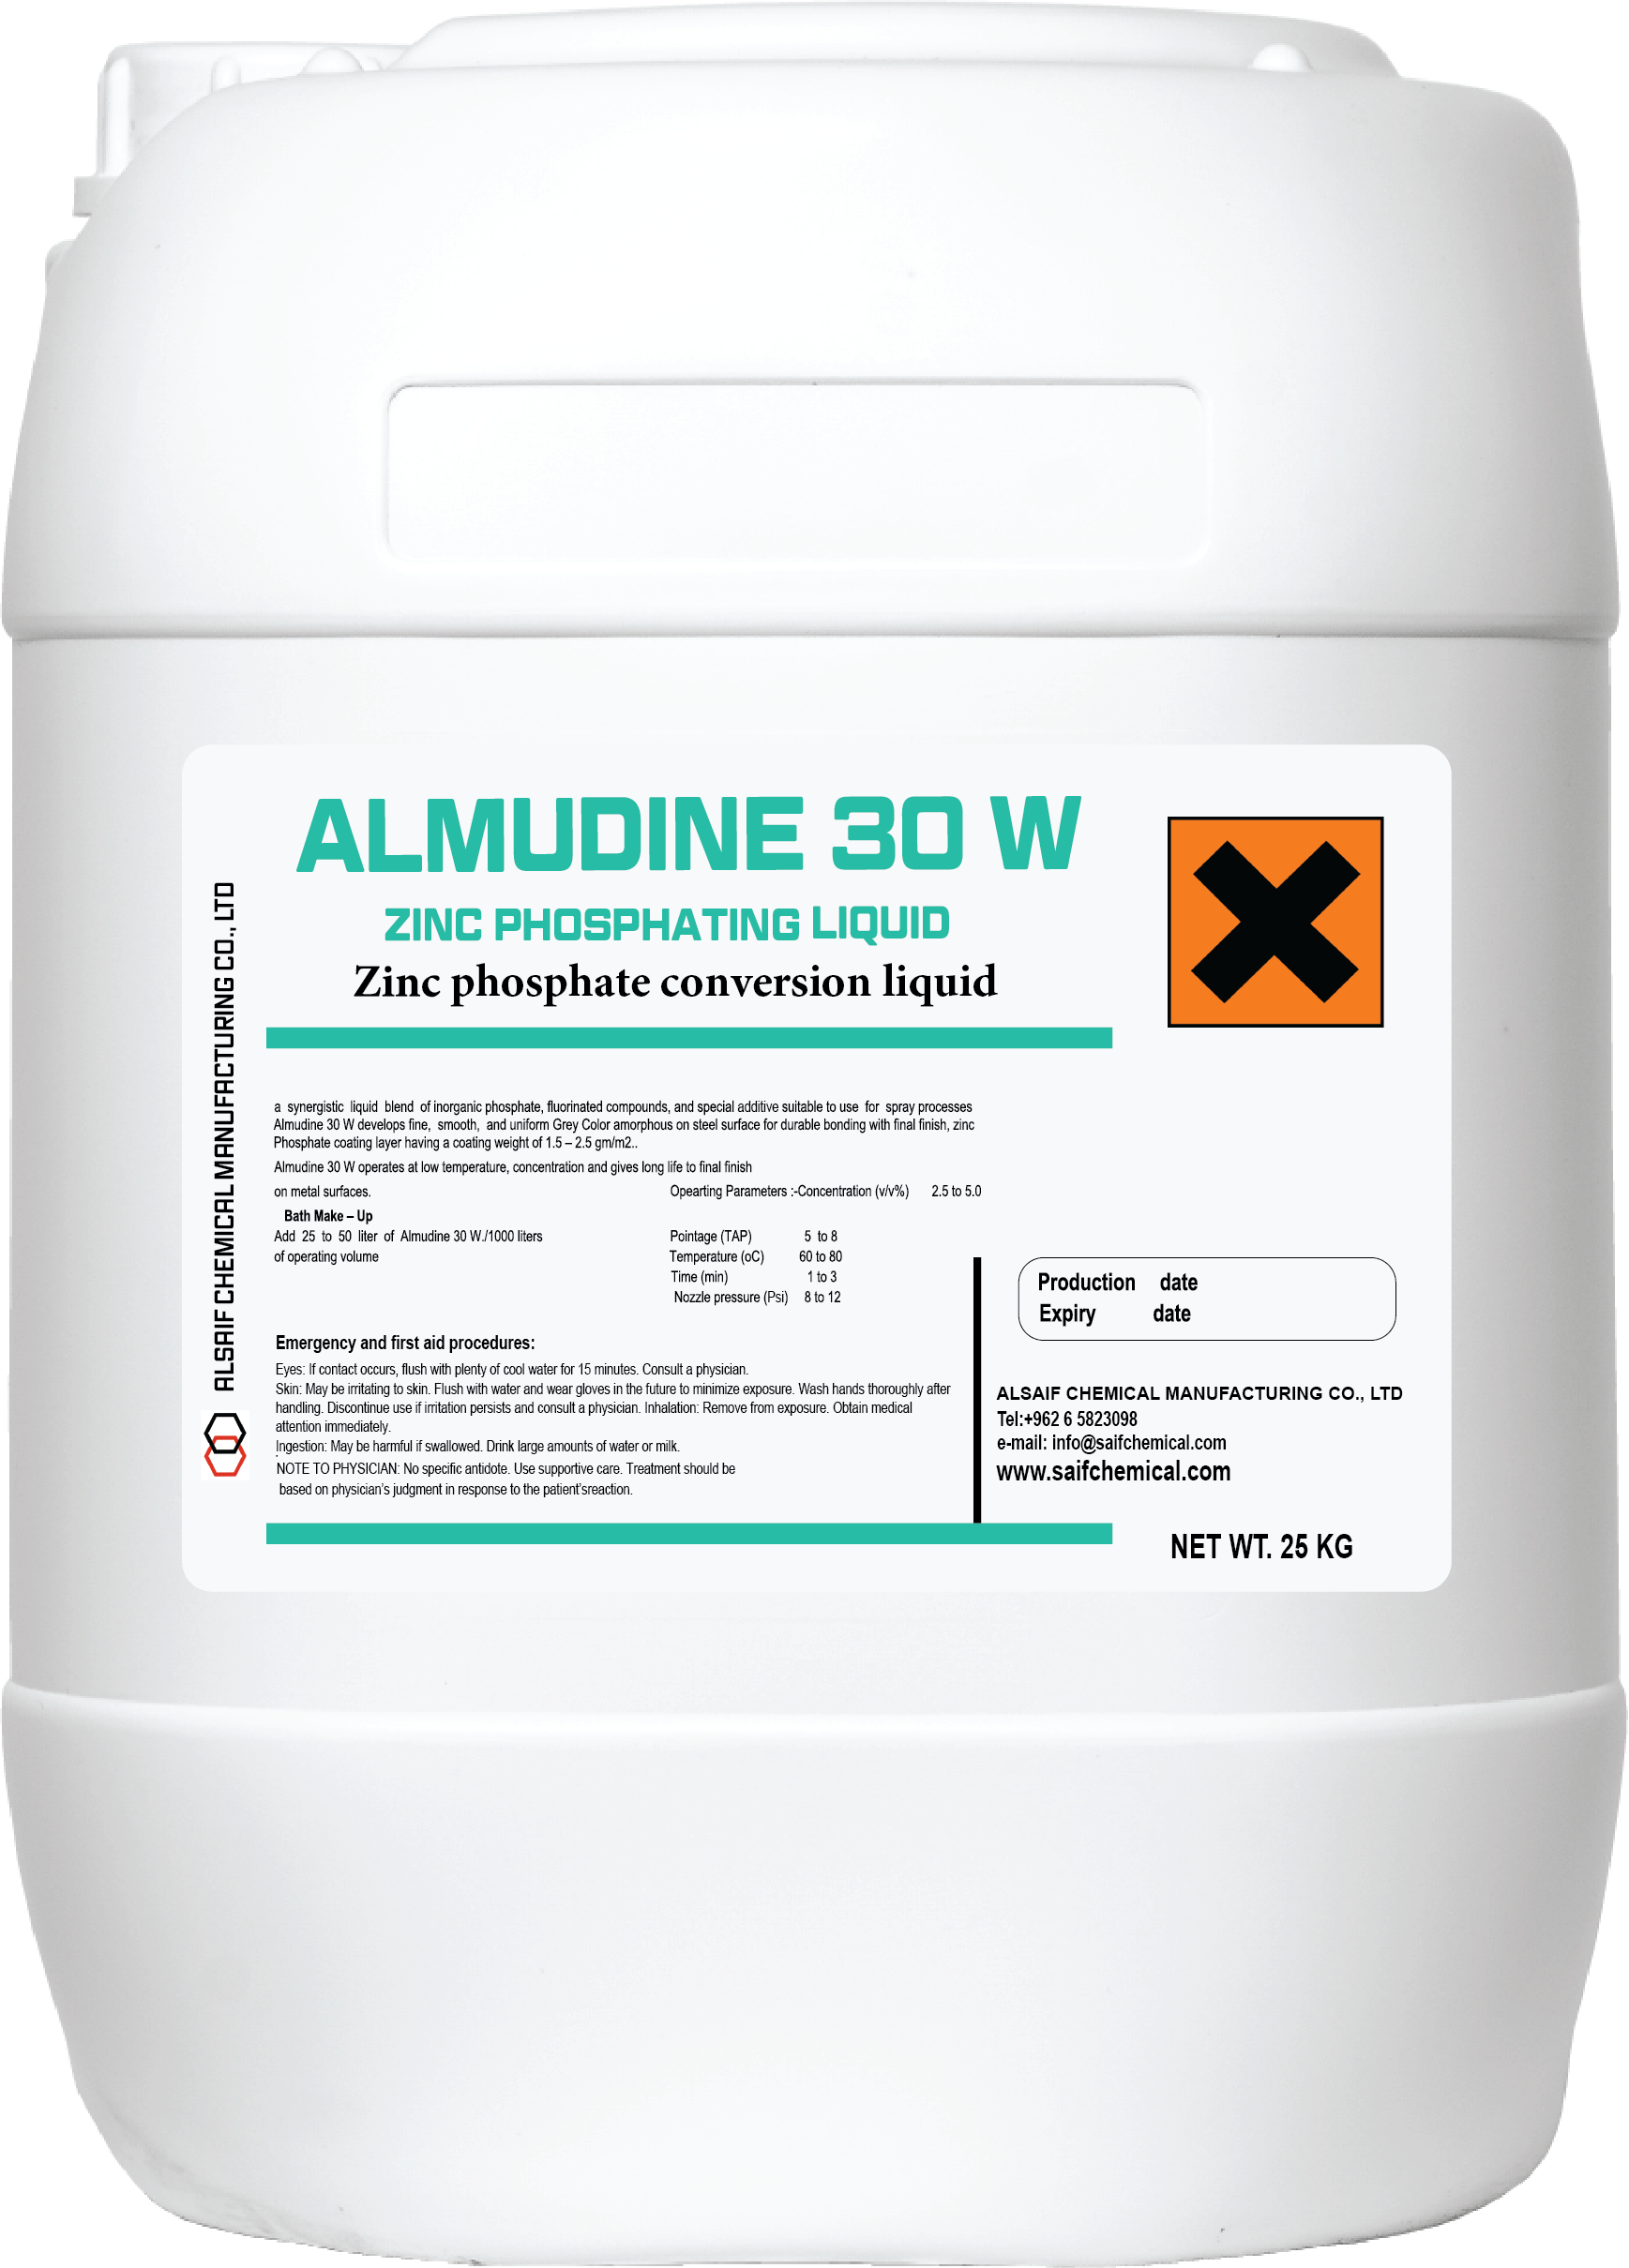 Almudine 30 W